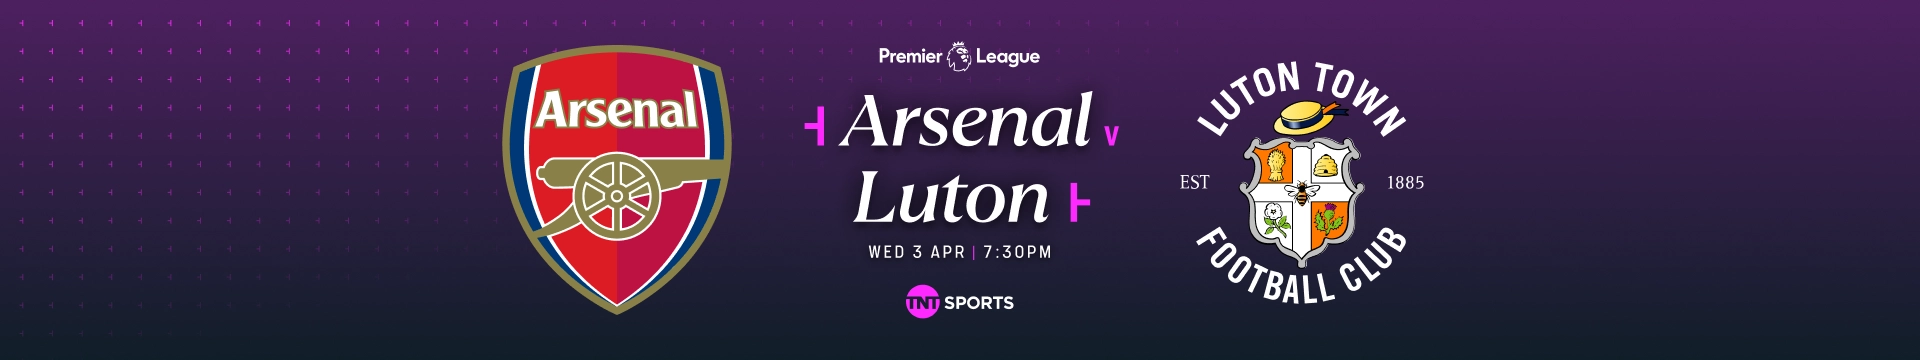 Arsenal v Luton Wednesday 3 April at 7:30pm